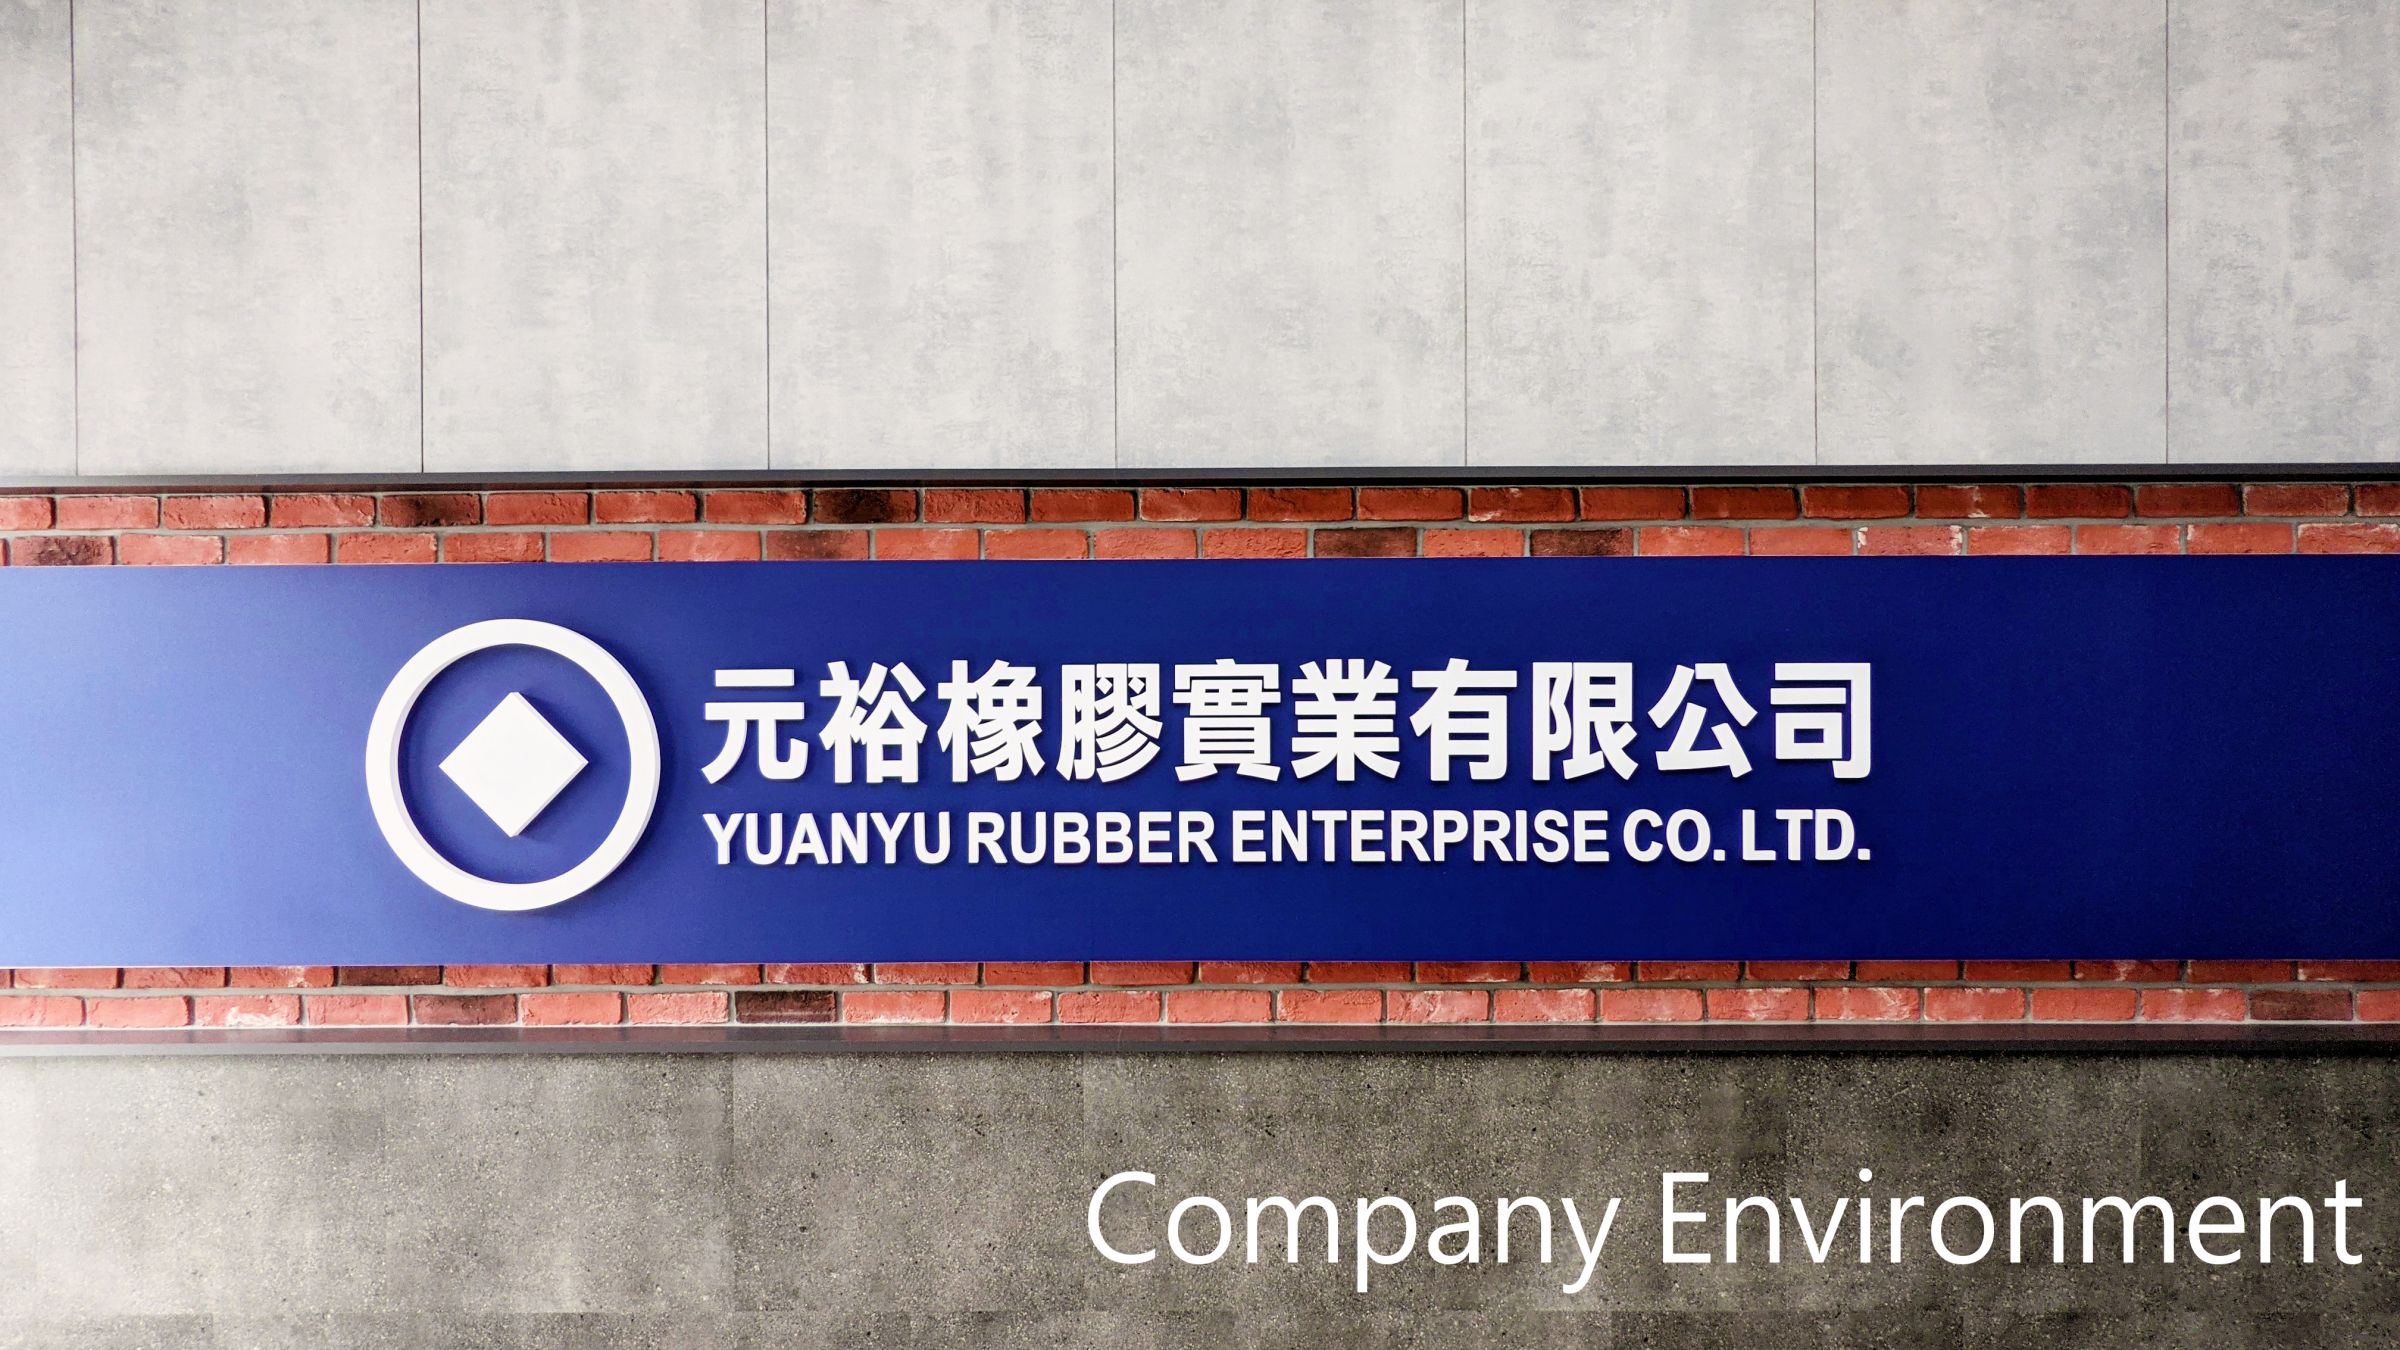 Company Environment - Yuanyu Company Environment.jpg